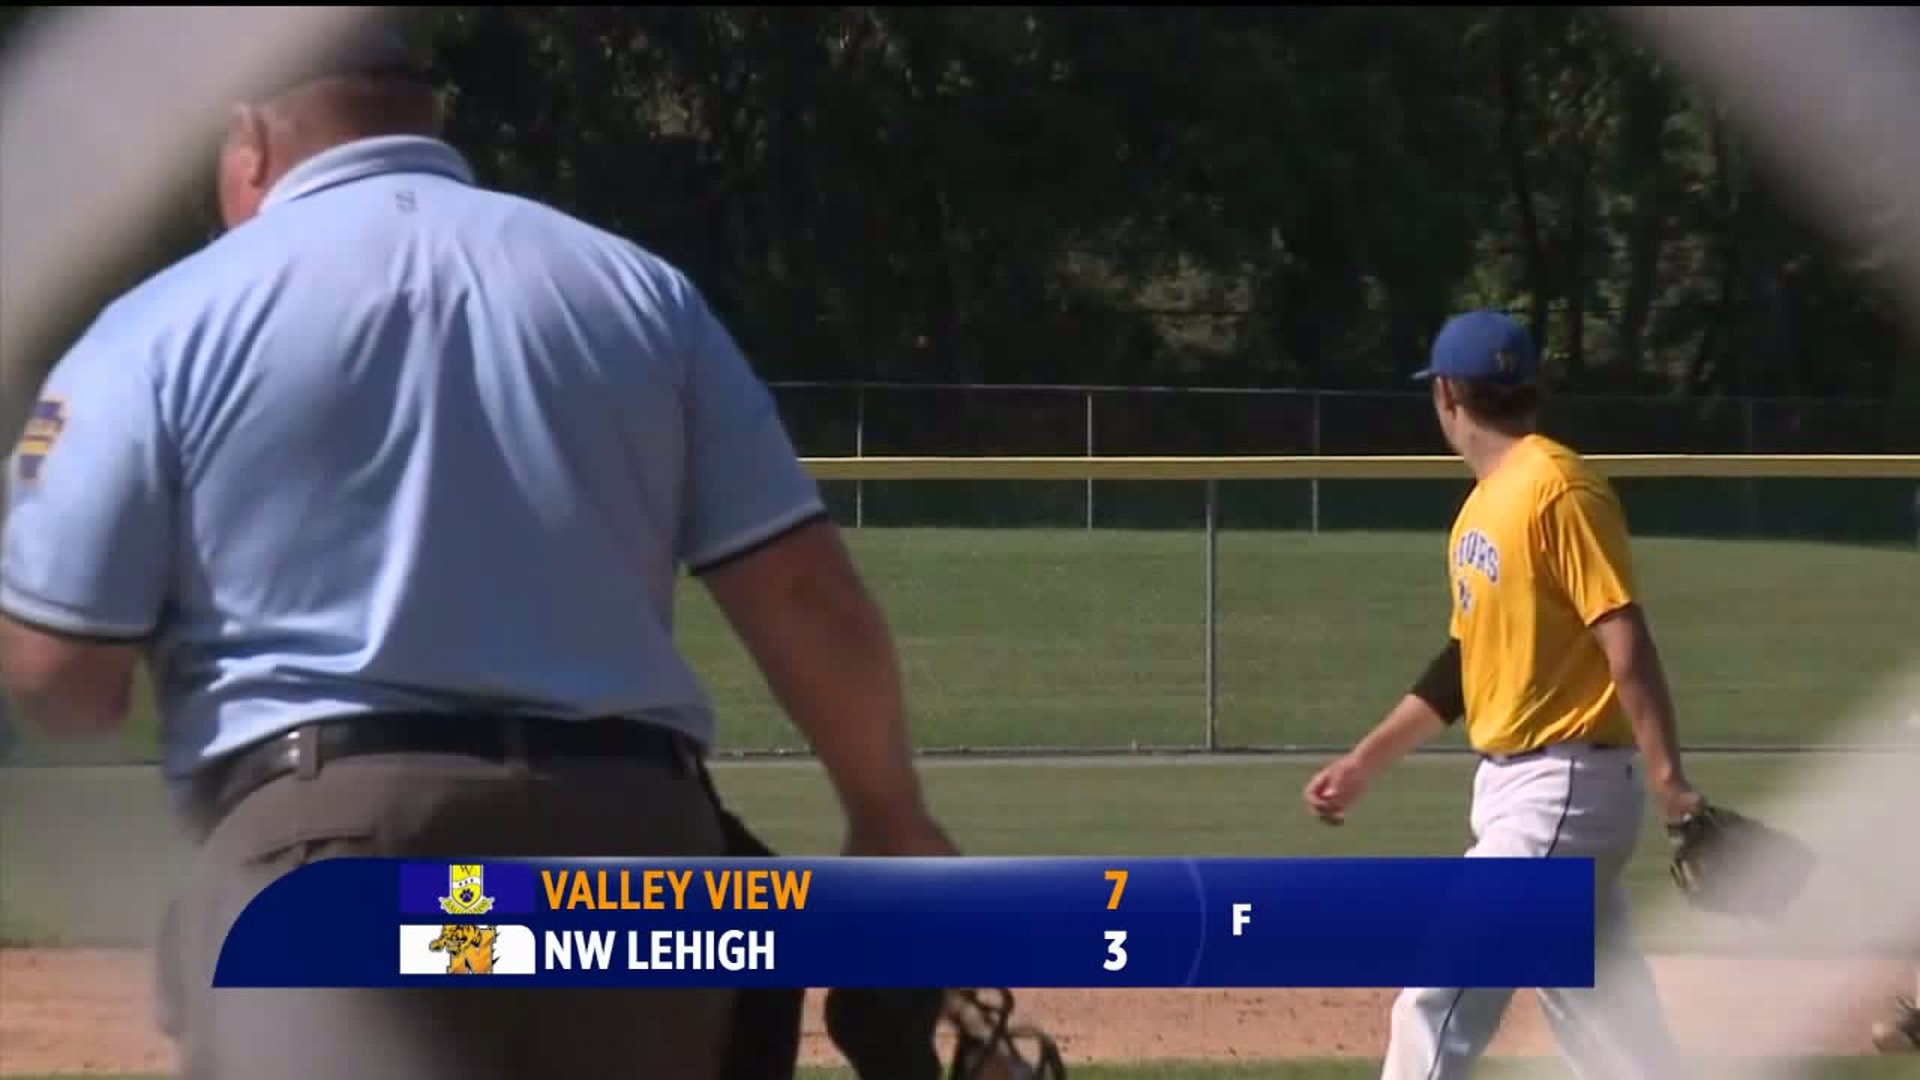 Valley View vs NW Lehigh baseball